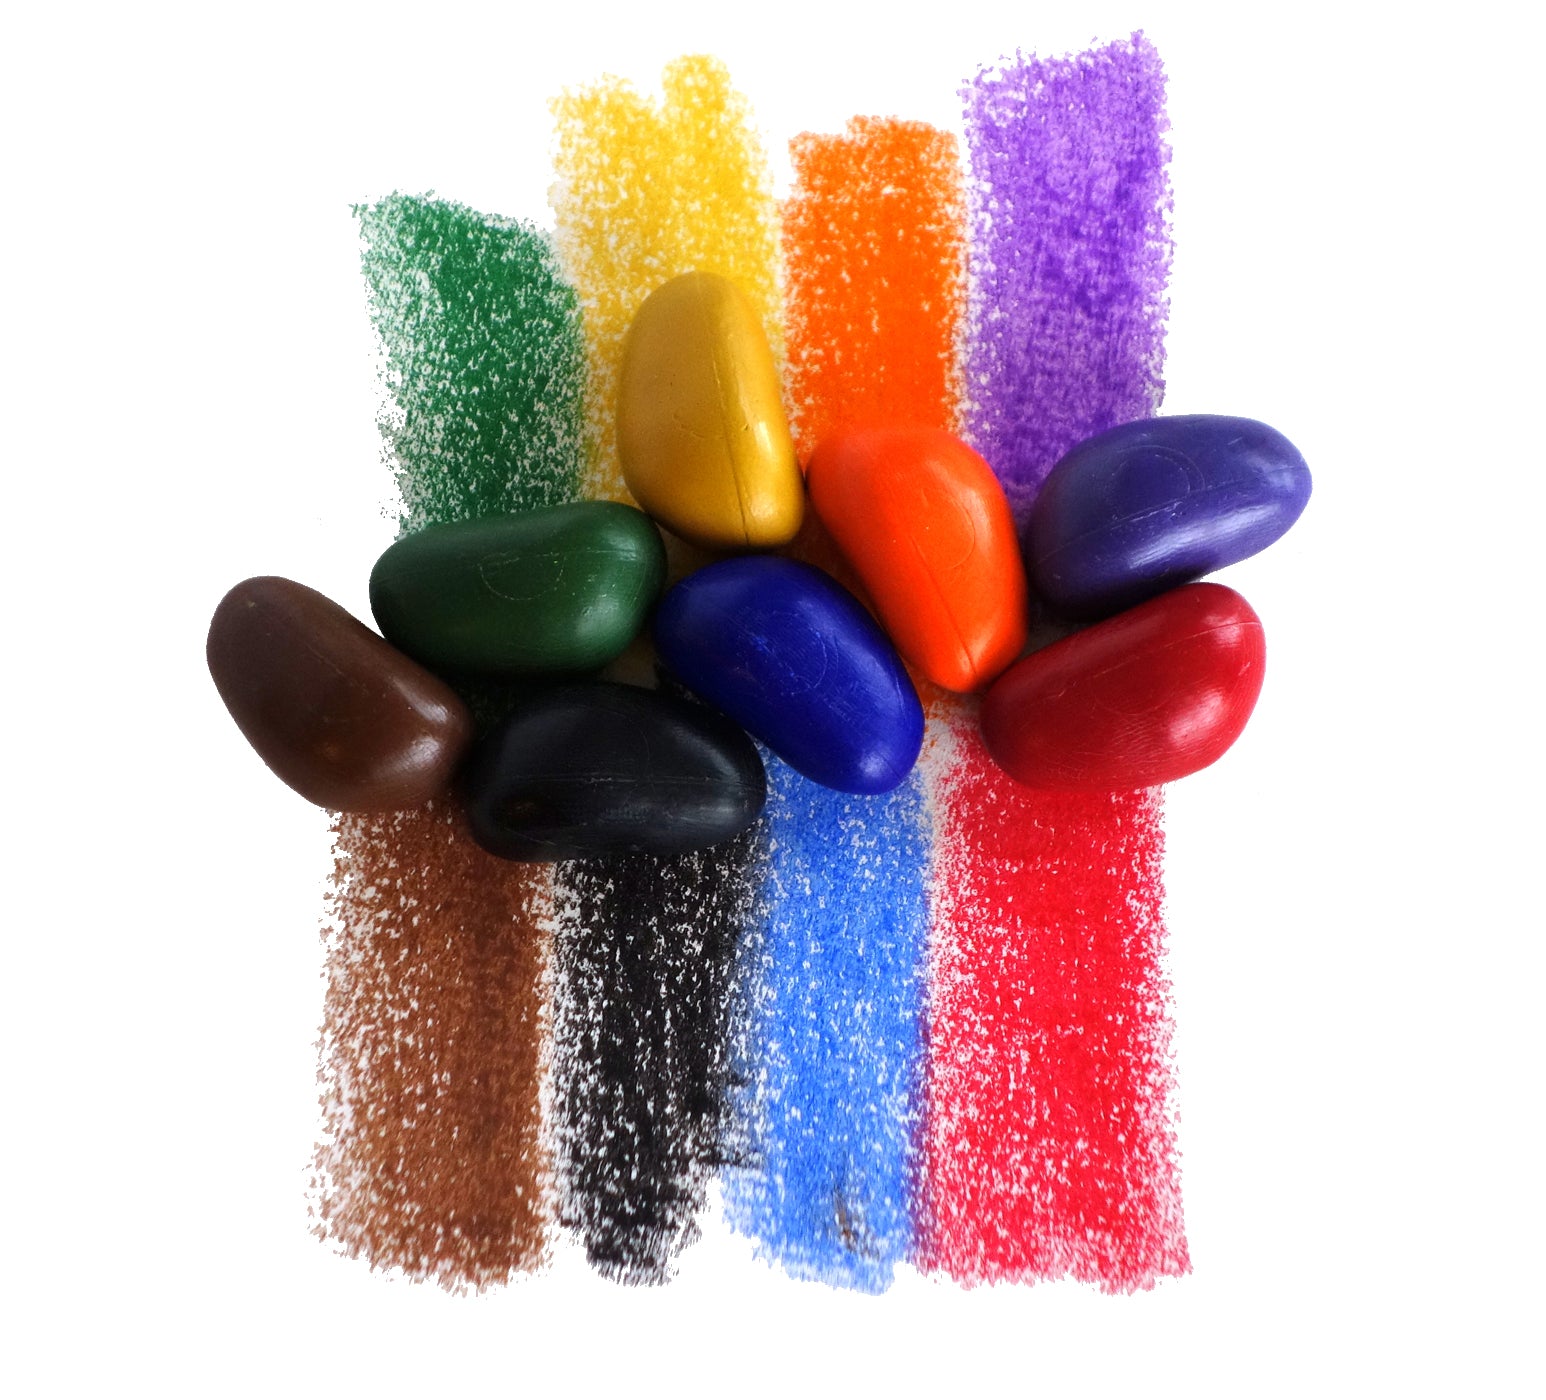 Crayon Rocks wholesale products